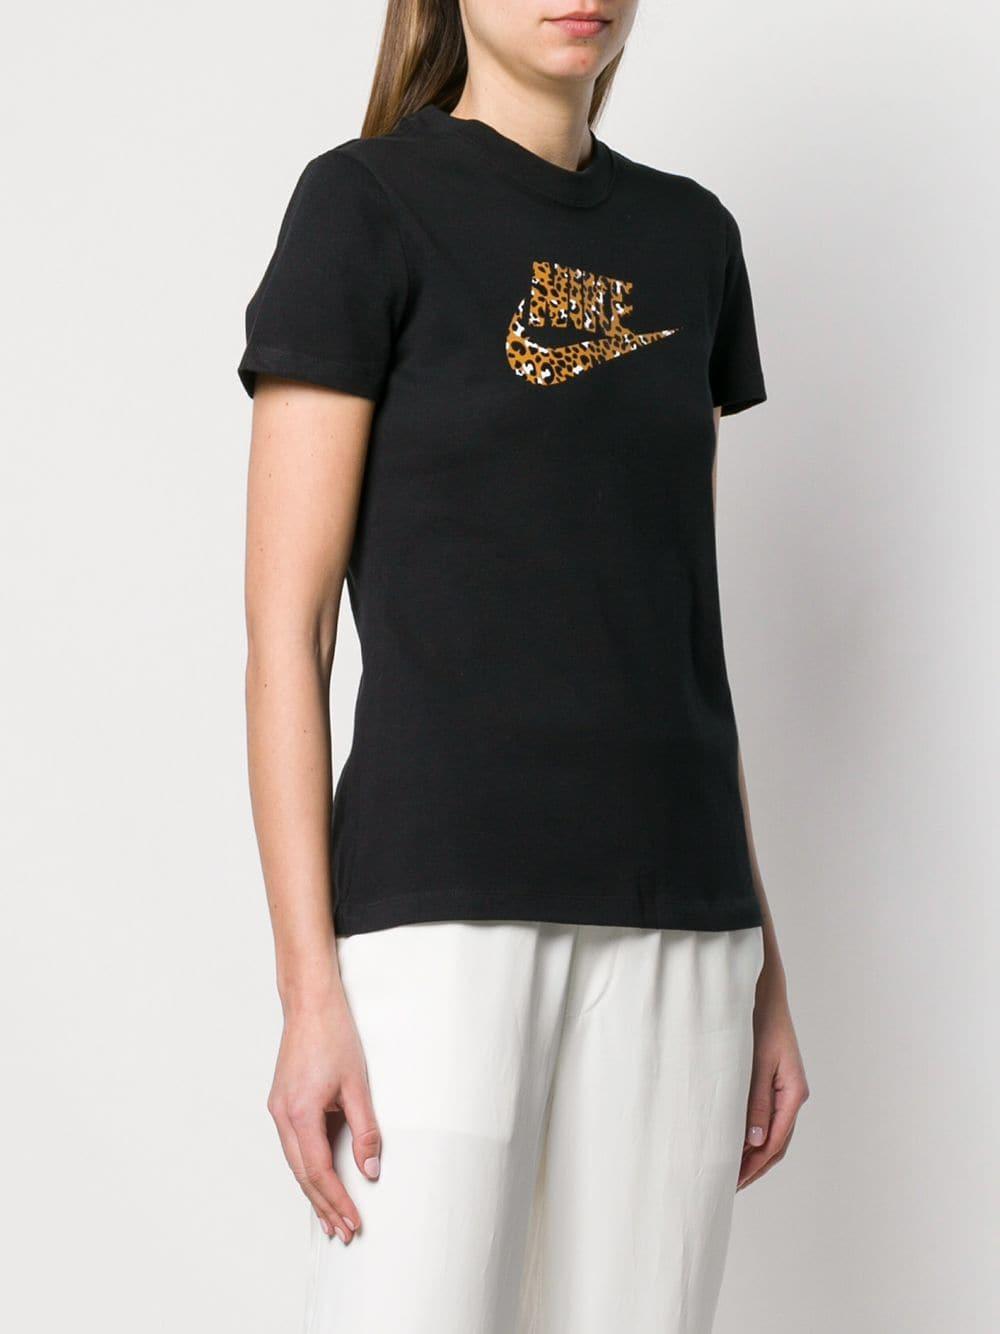 Nike Leopard Print Logo T-shirt in Black - Lyst